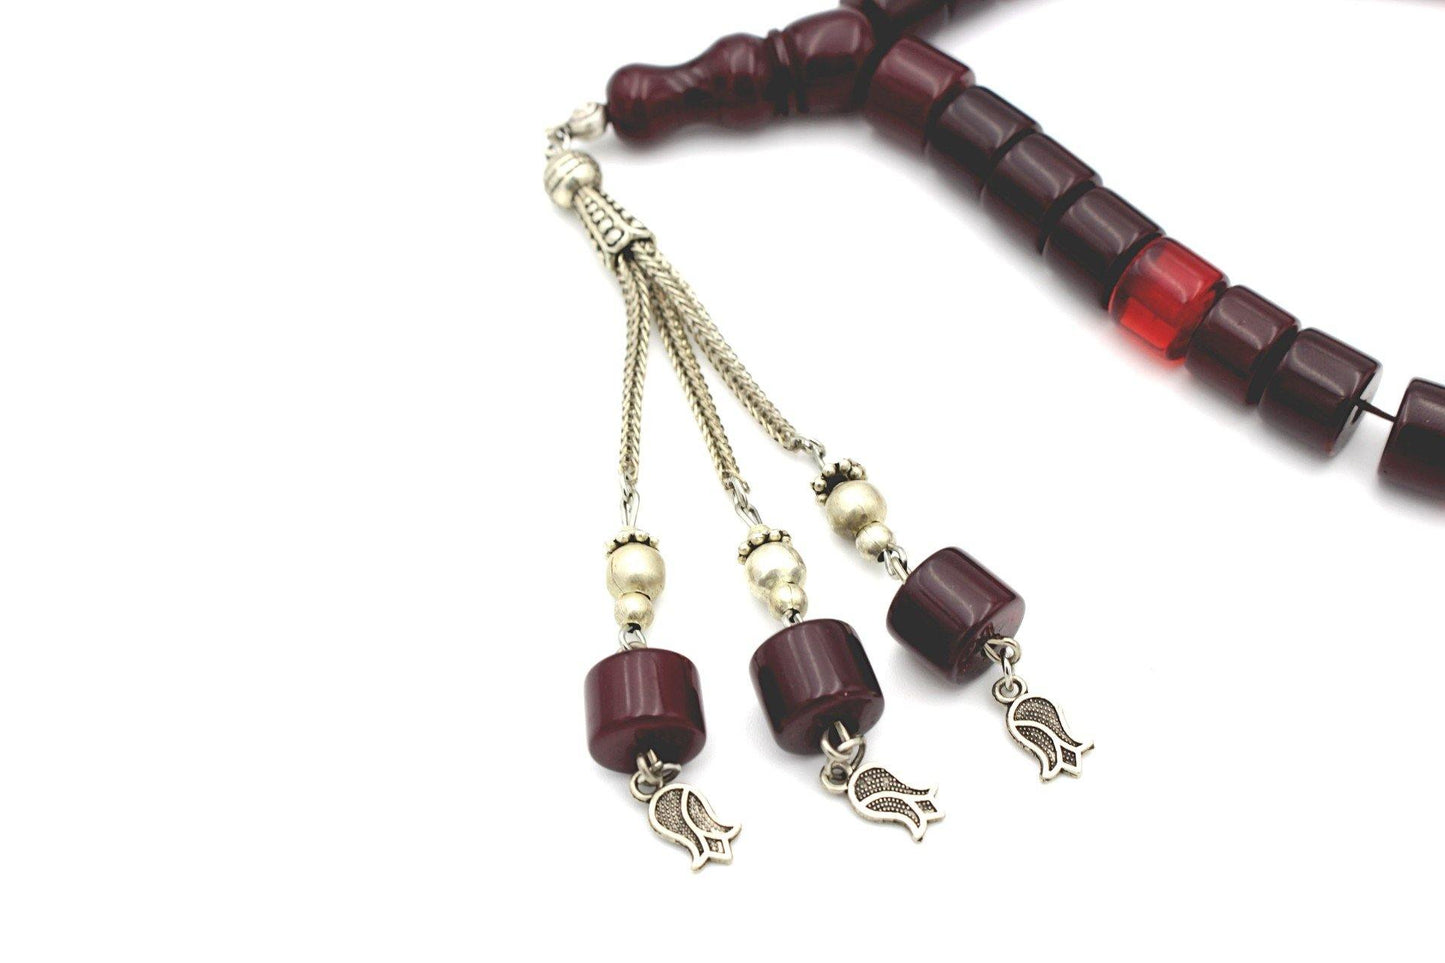 uk gemstones jewellery tasbih islamic prayer beads bakelite